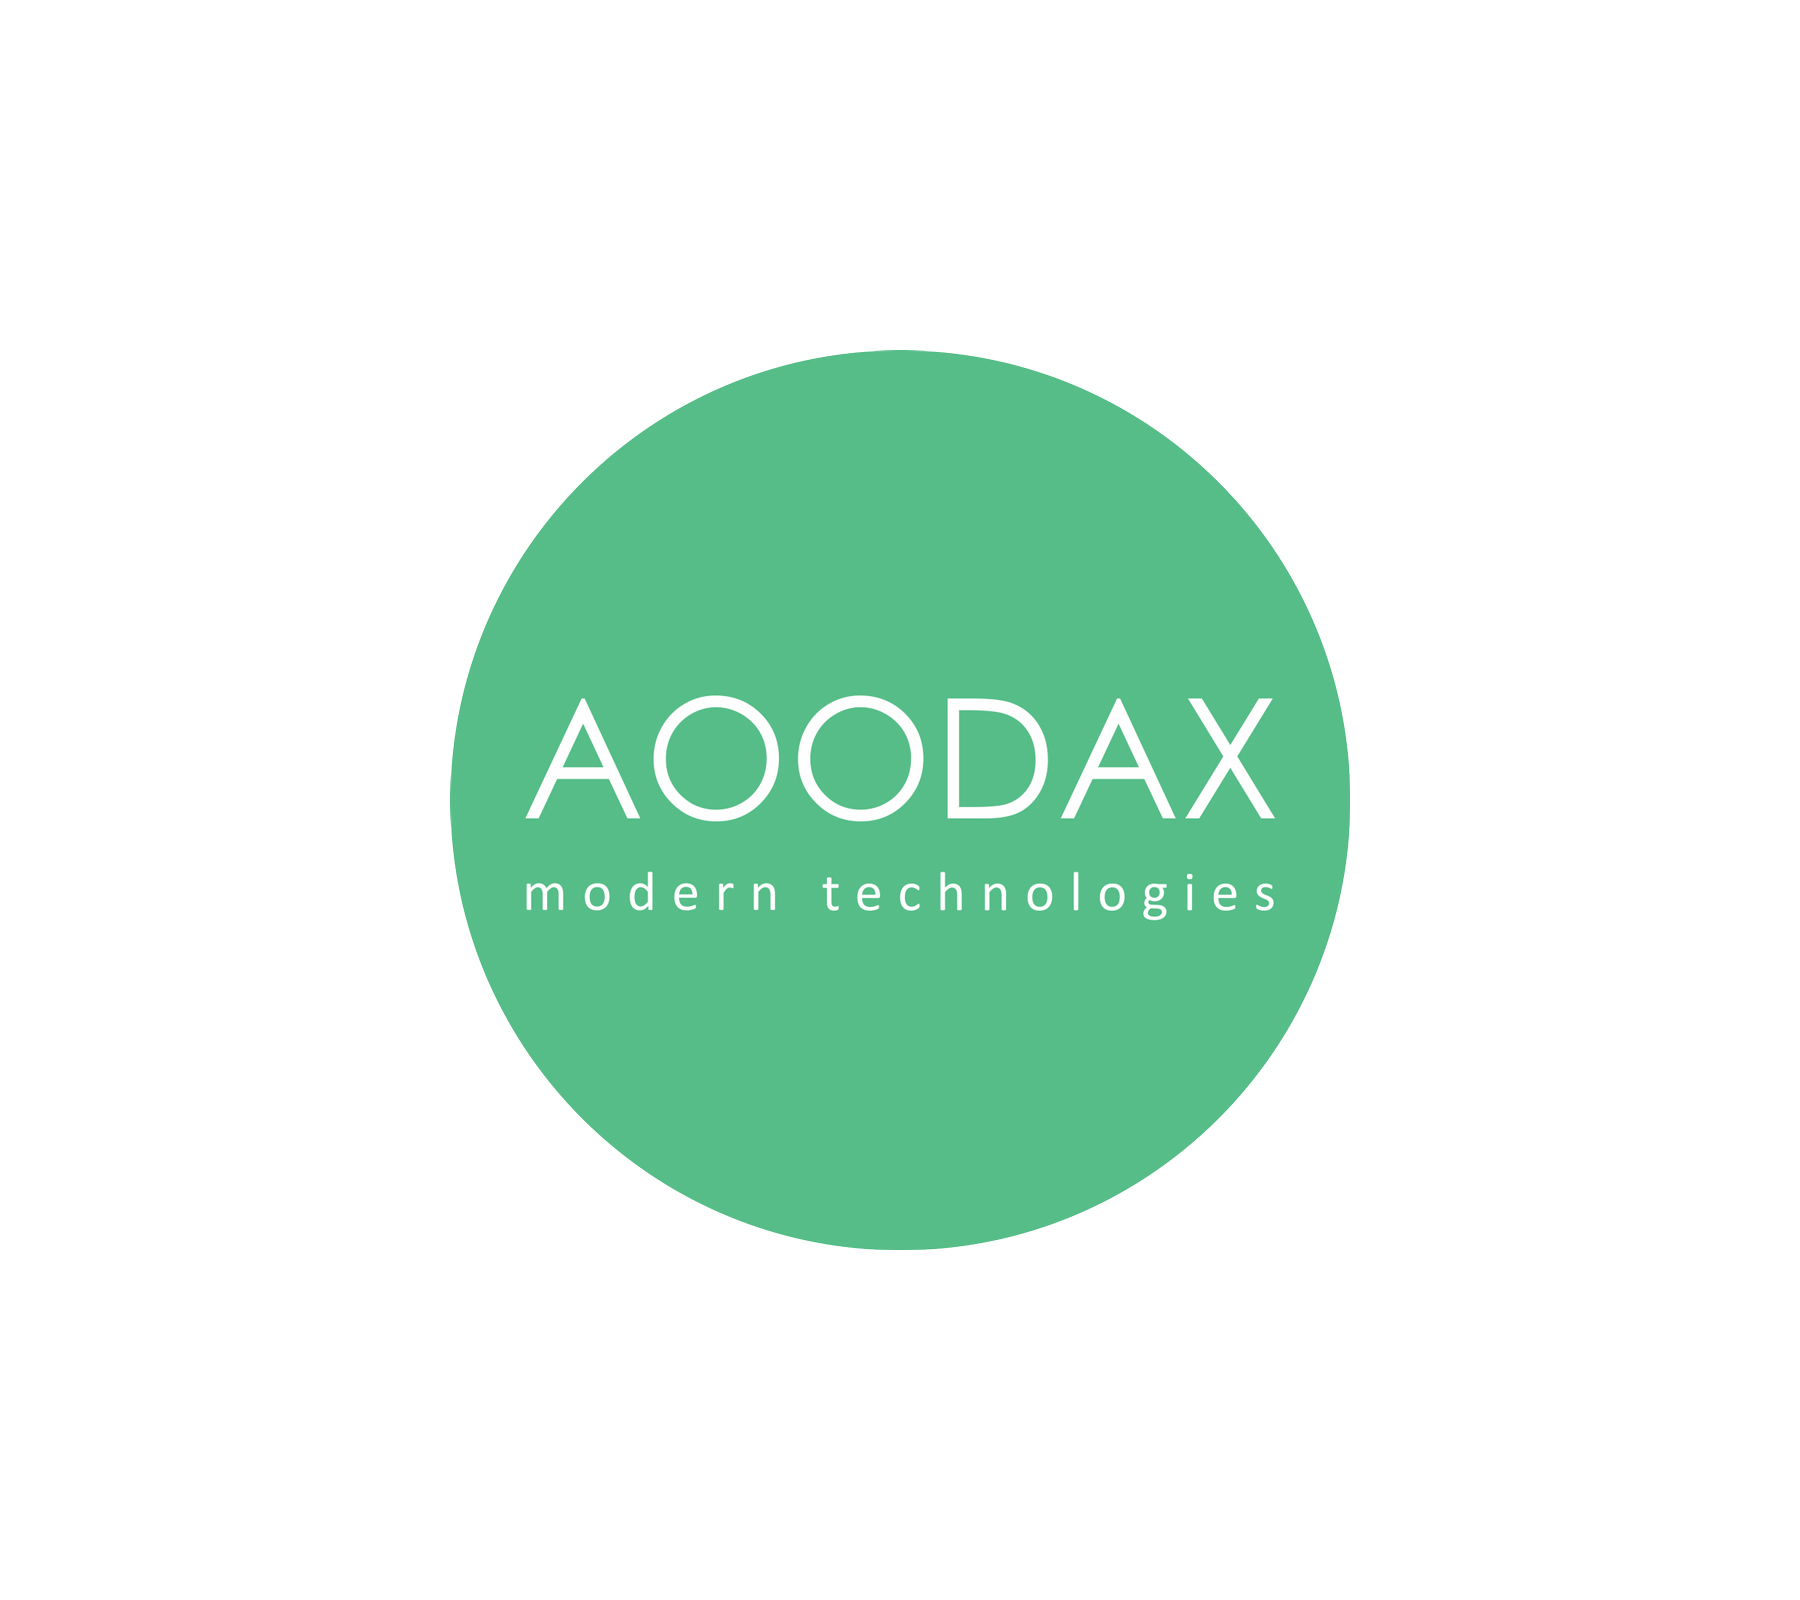 (c) Aoodax.com